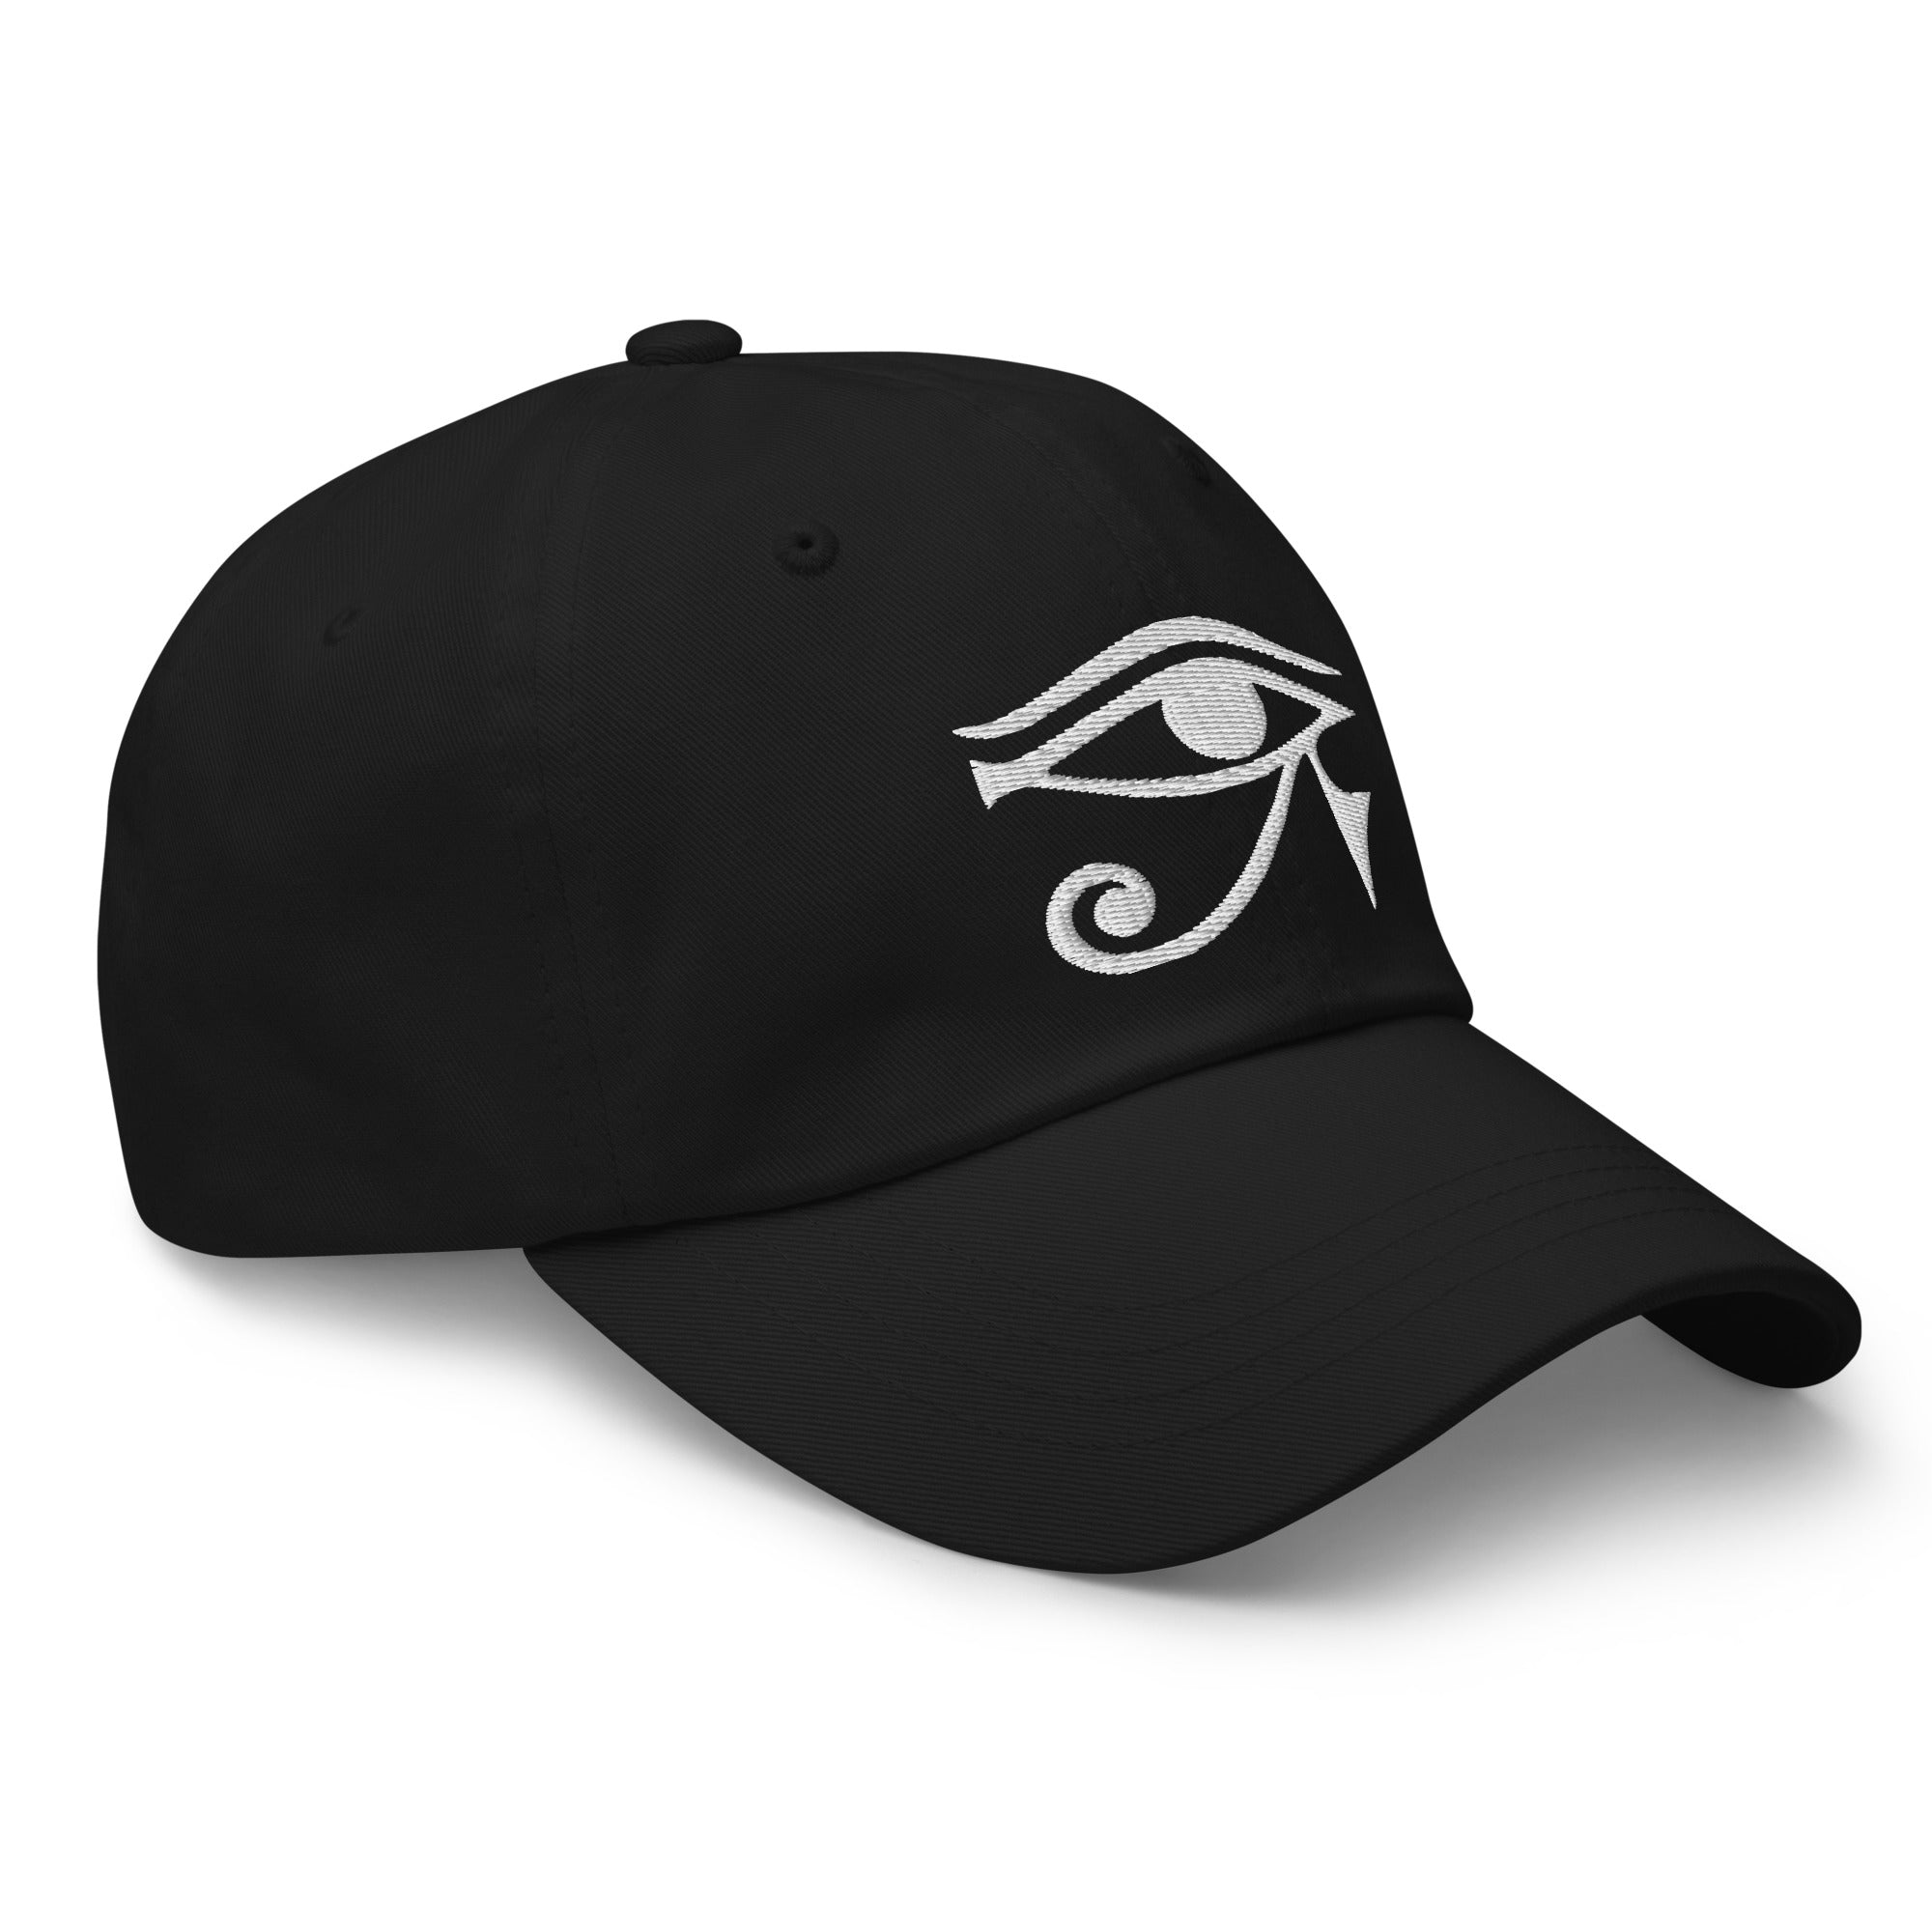 Eye of Ra Egyptian Goddess Embroidered Baseball Cap White Thread Dad hat - Edge of Life Designs